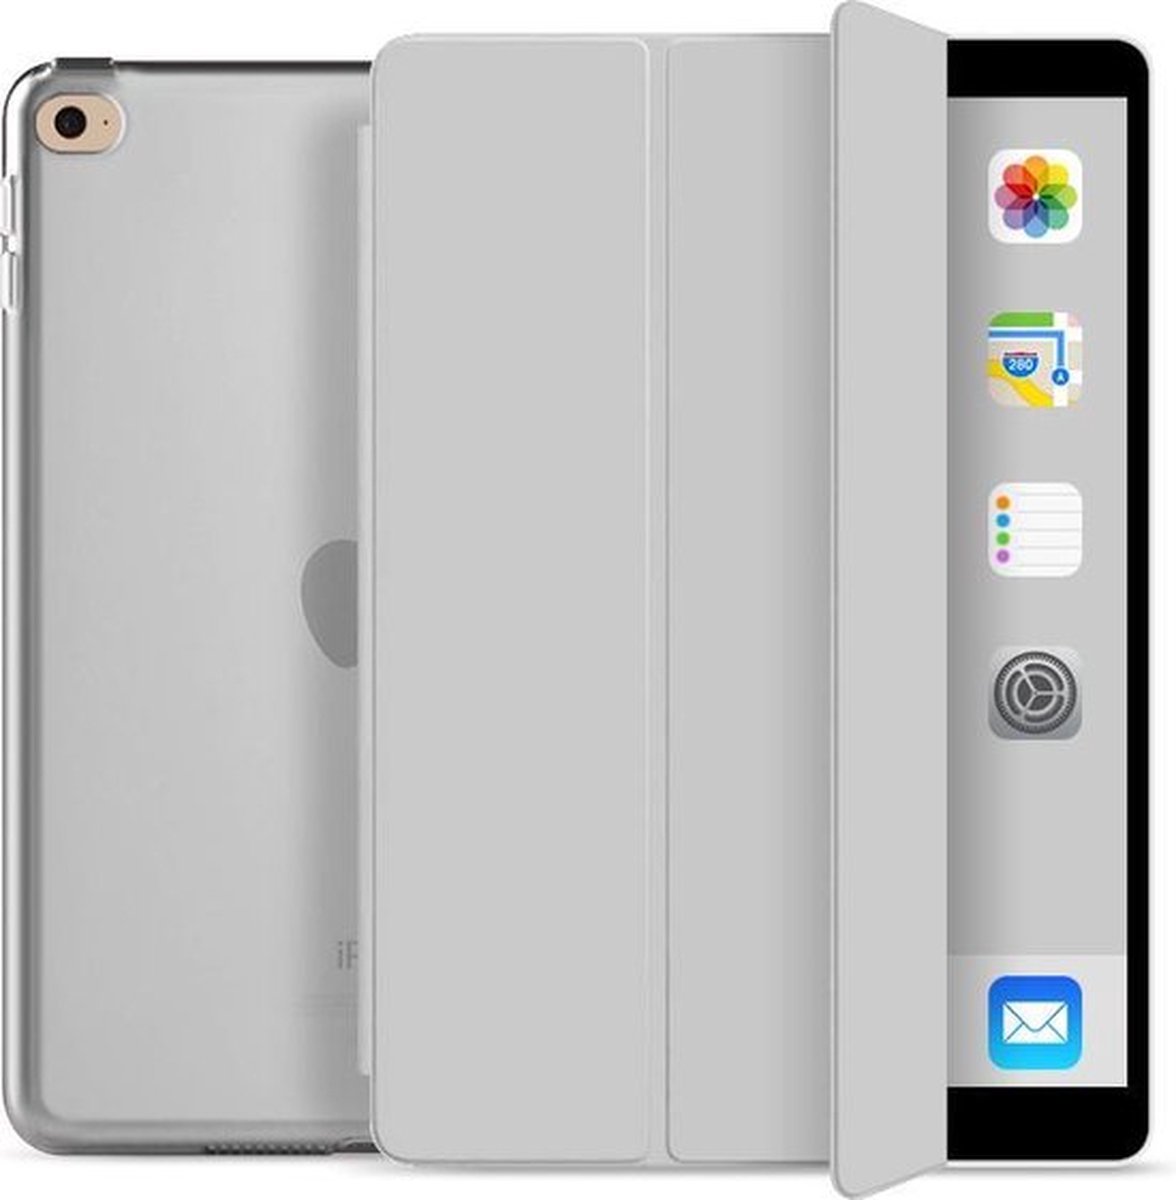 Ipad mini 5 hardcover – Ipad hoes – hard cover – Hoes voor iPad mini 5– Tablet beschermer - grijs